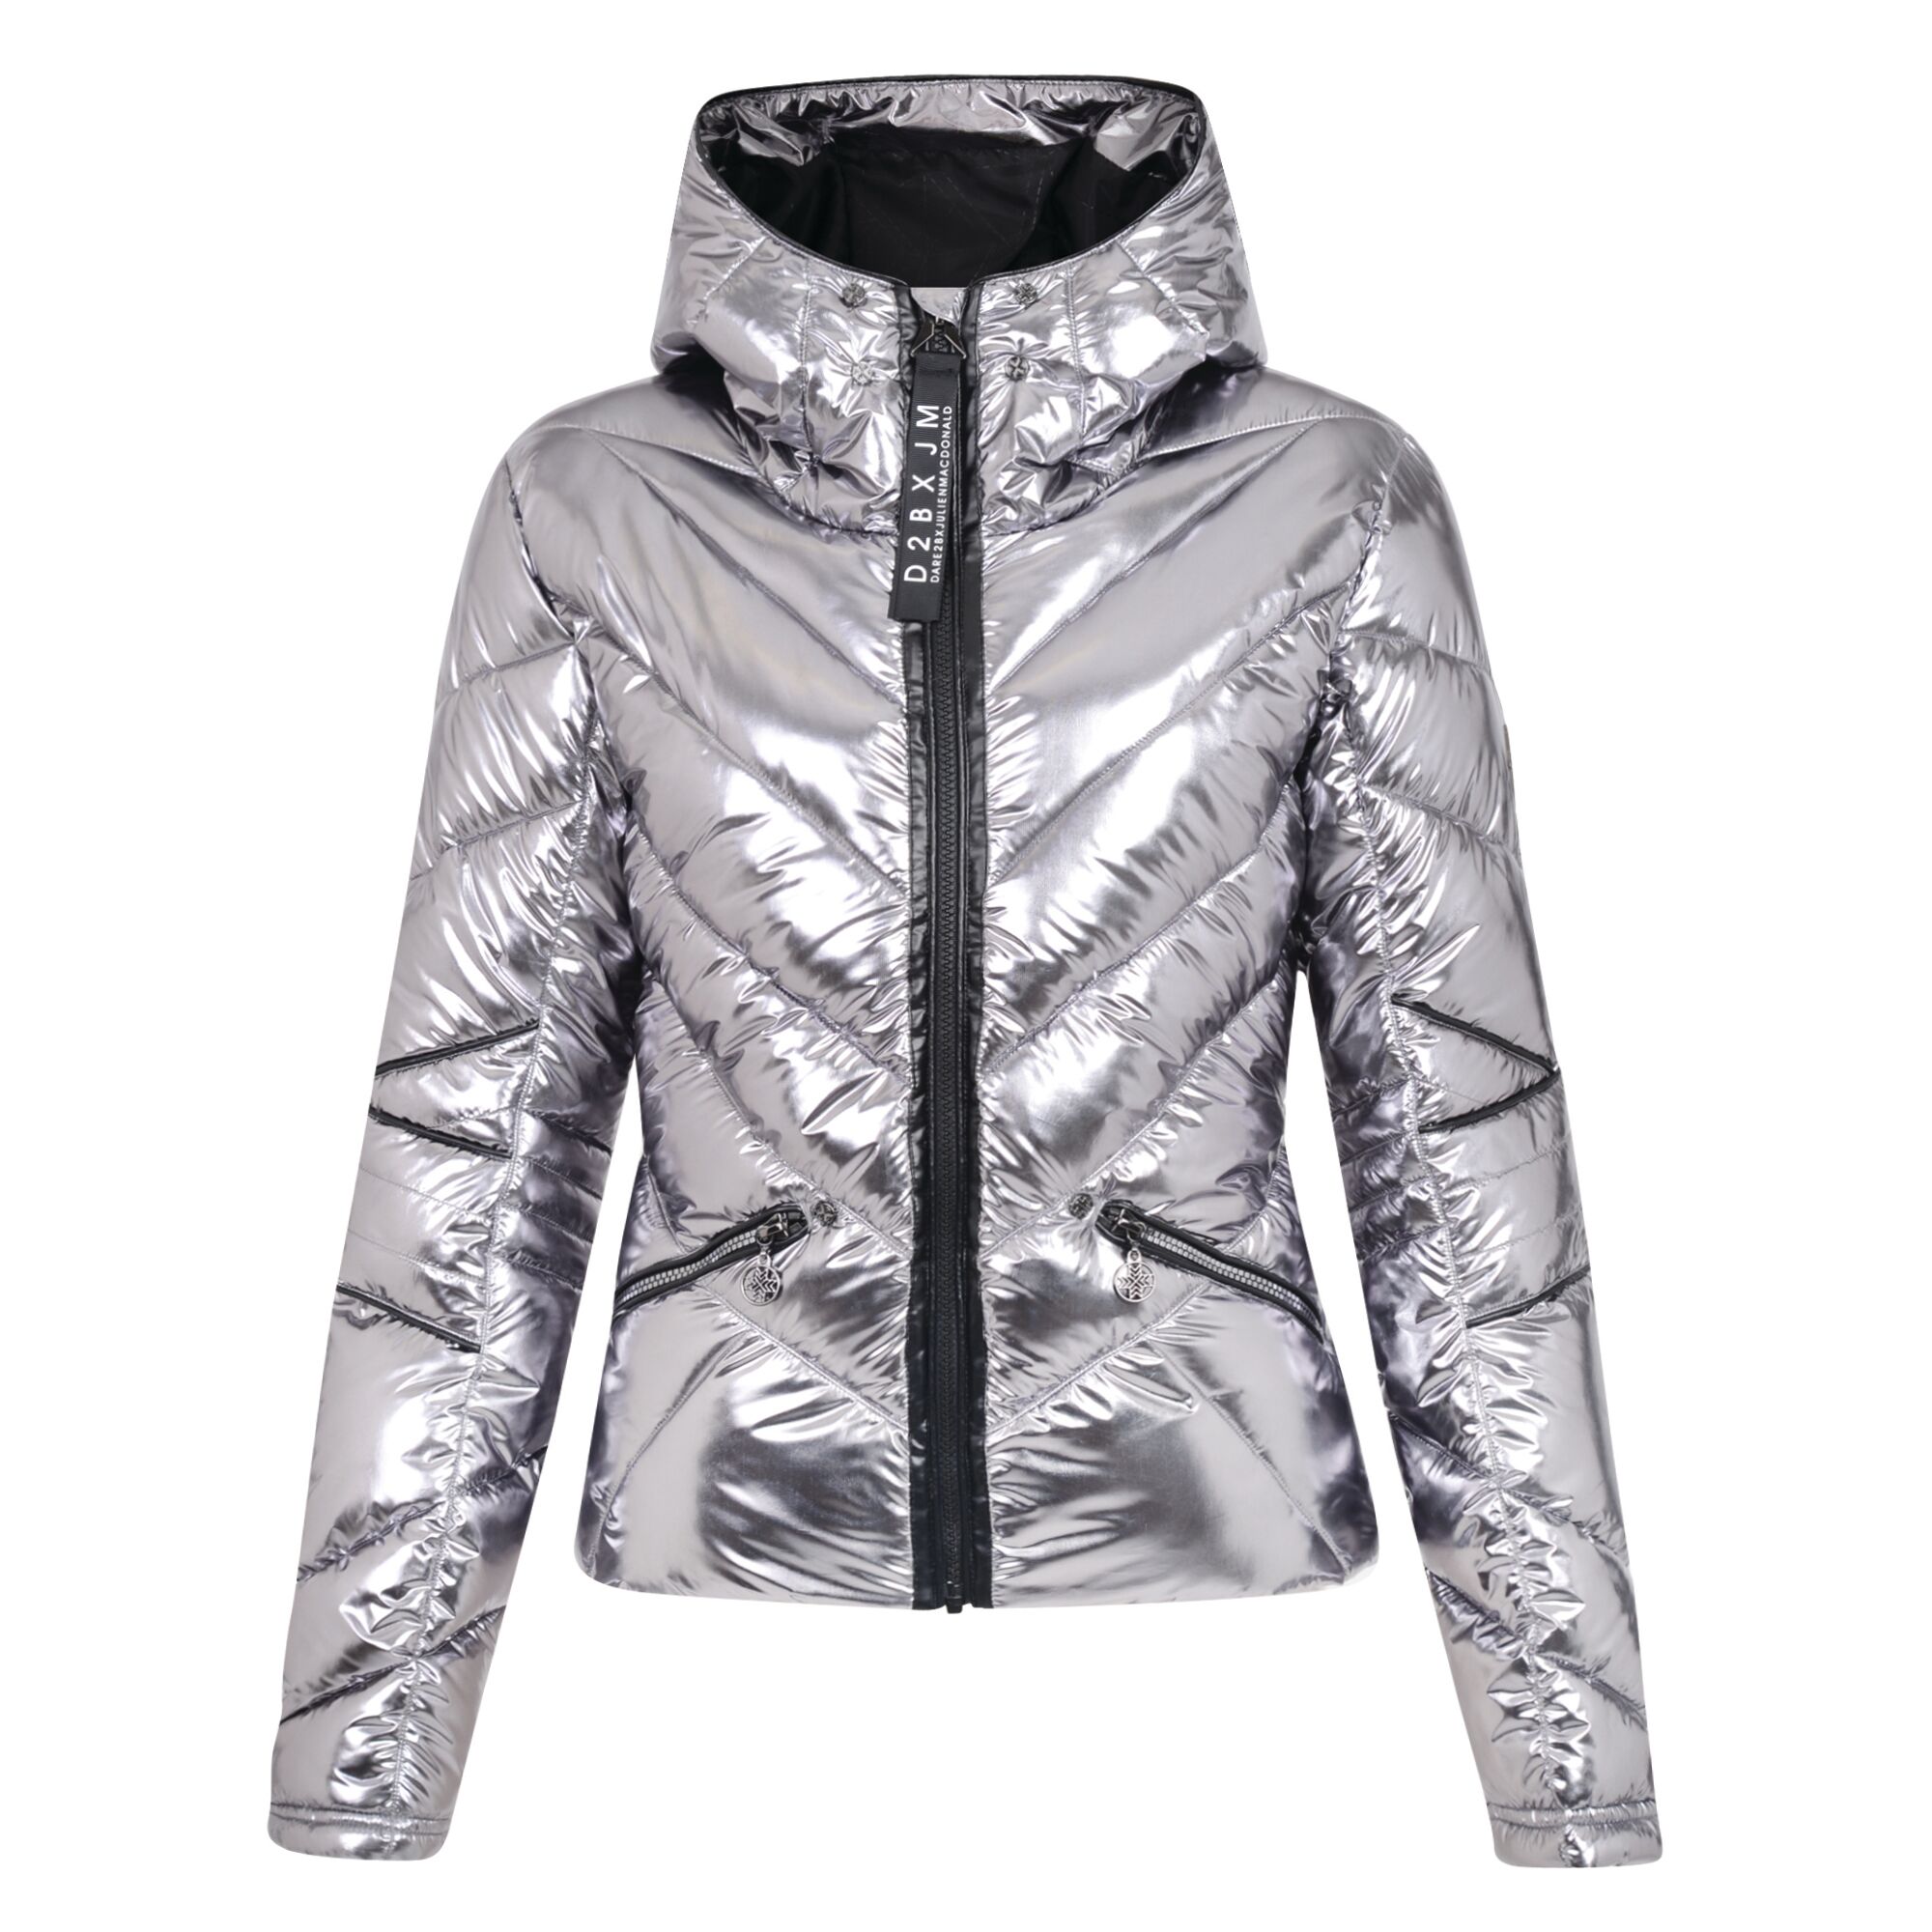 Geci Ski & Snow -  dare 2b Countess Waterproof Insulated Jacket